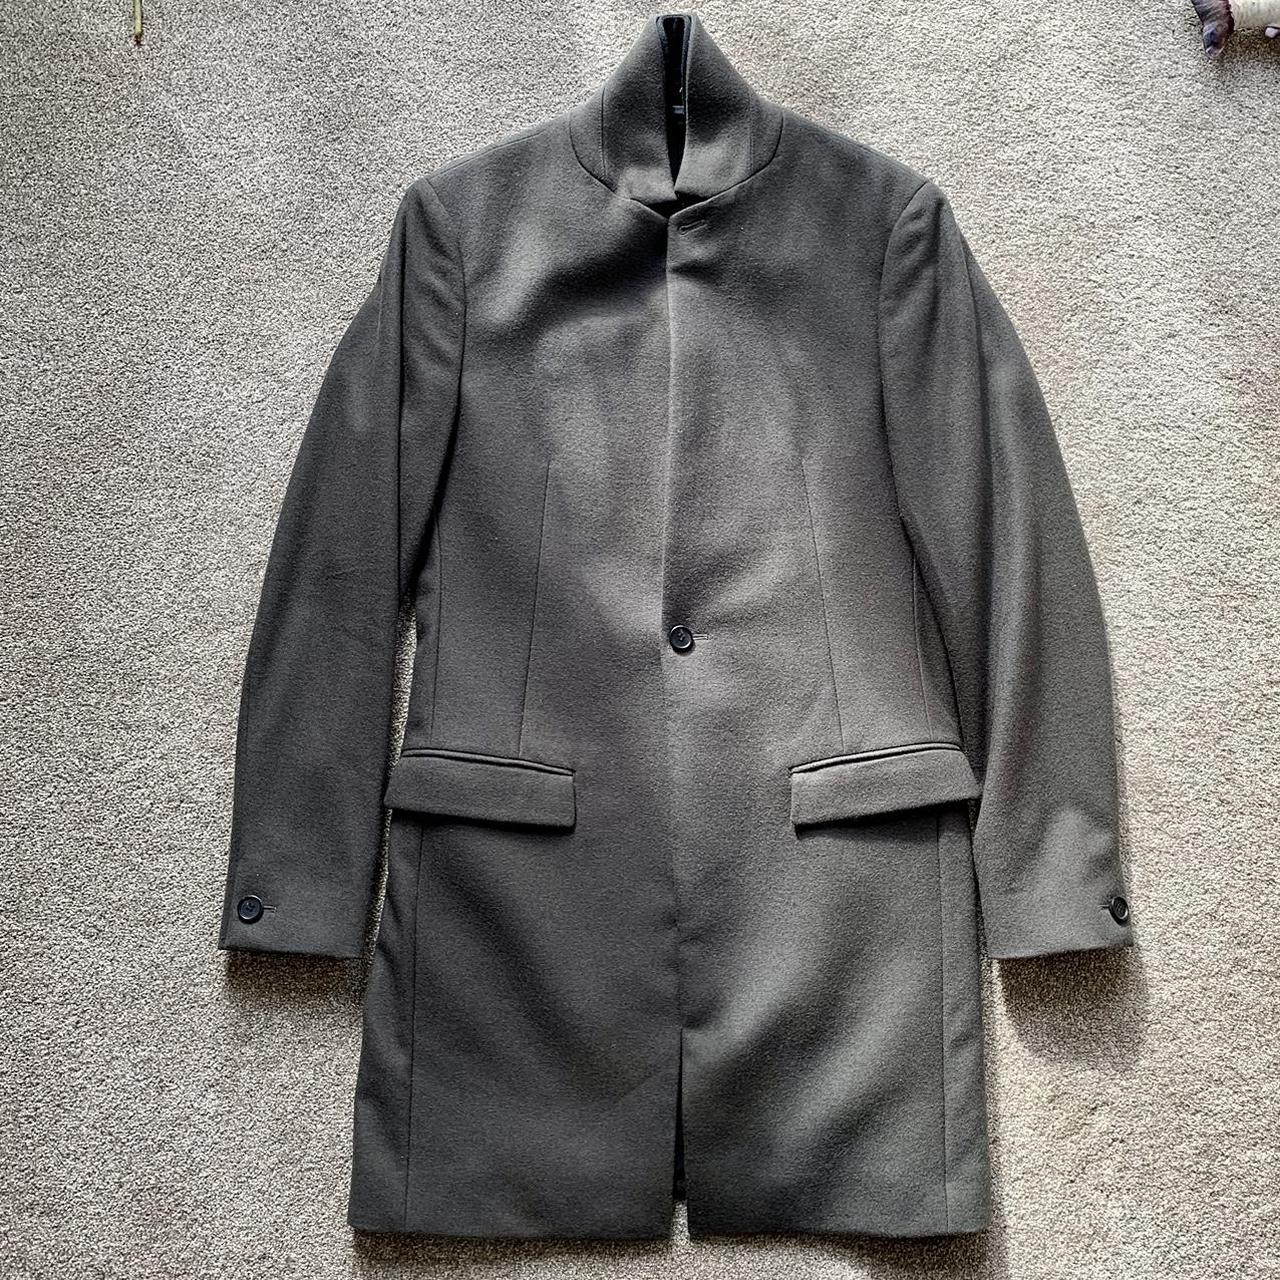 ALLSAINTS Men’s Overcoat in Olive, size 38R (men’s... - Depop